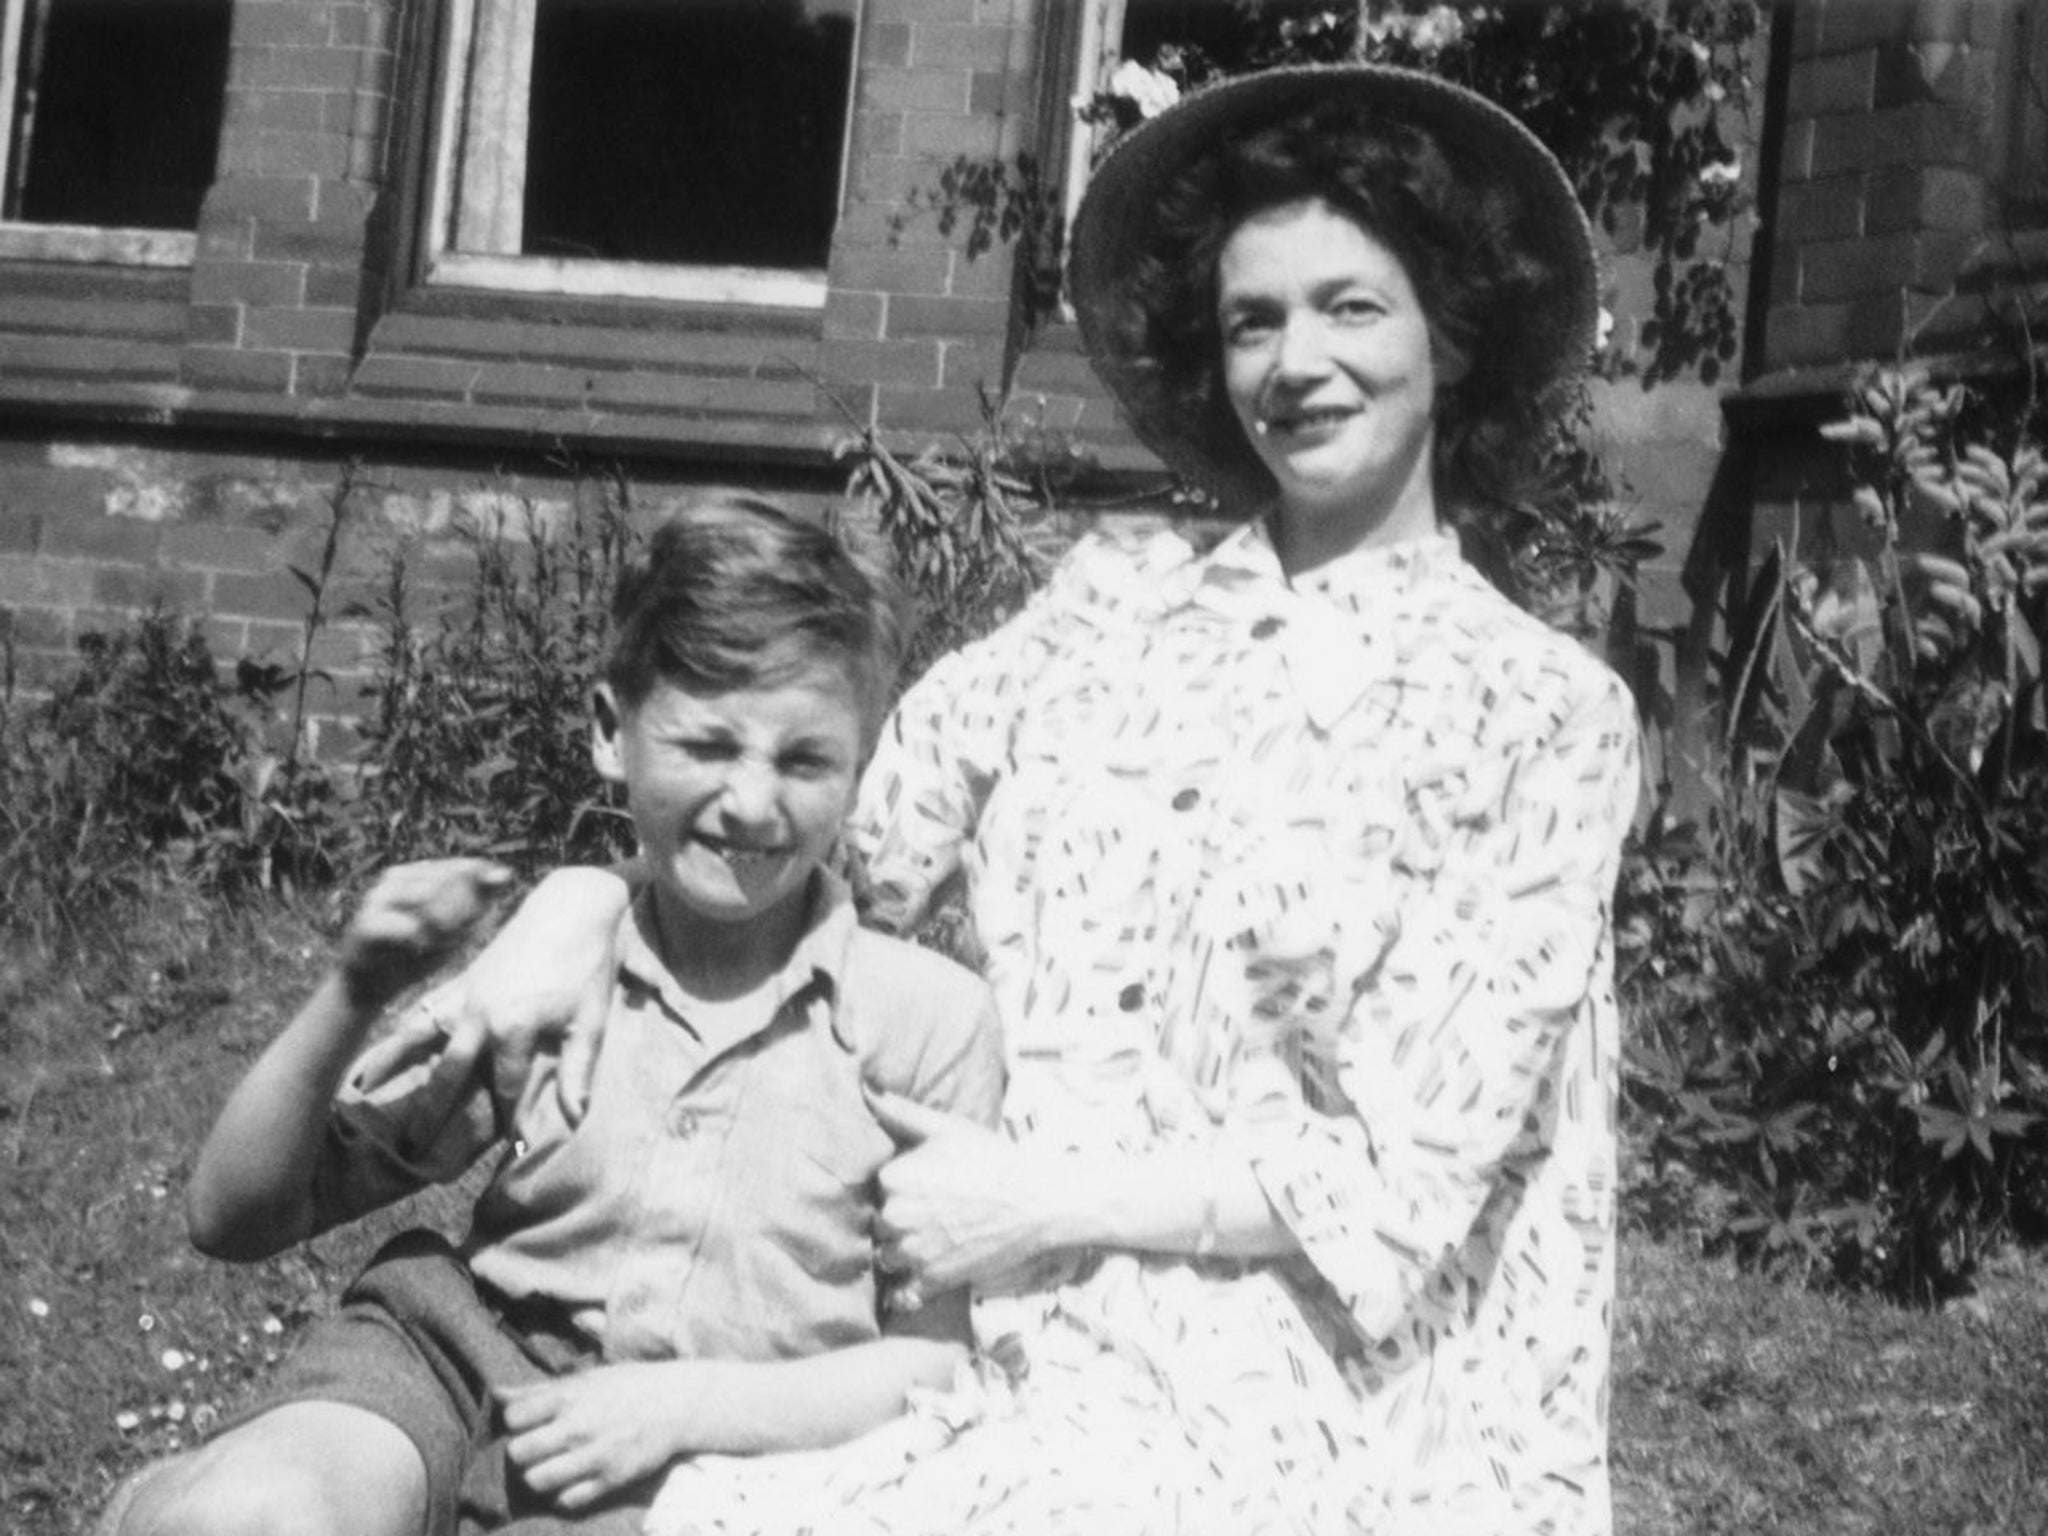 Singer, songwriter and musician John Lennon with his mother Julia Lennon in 1949